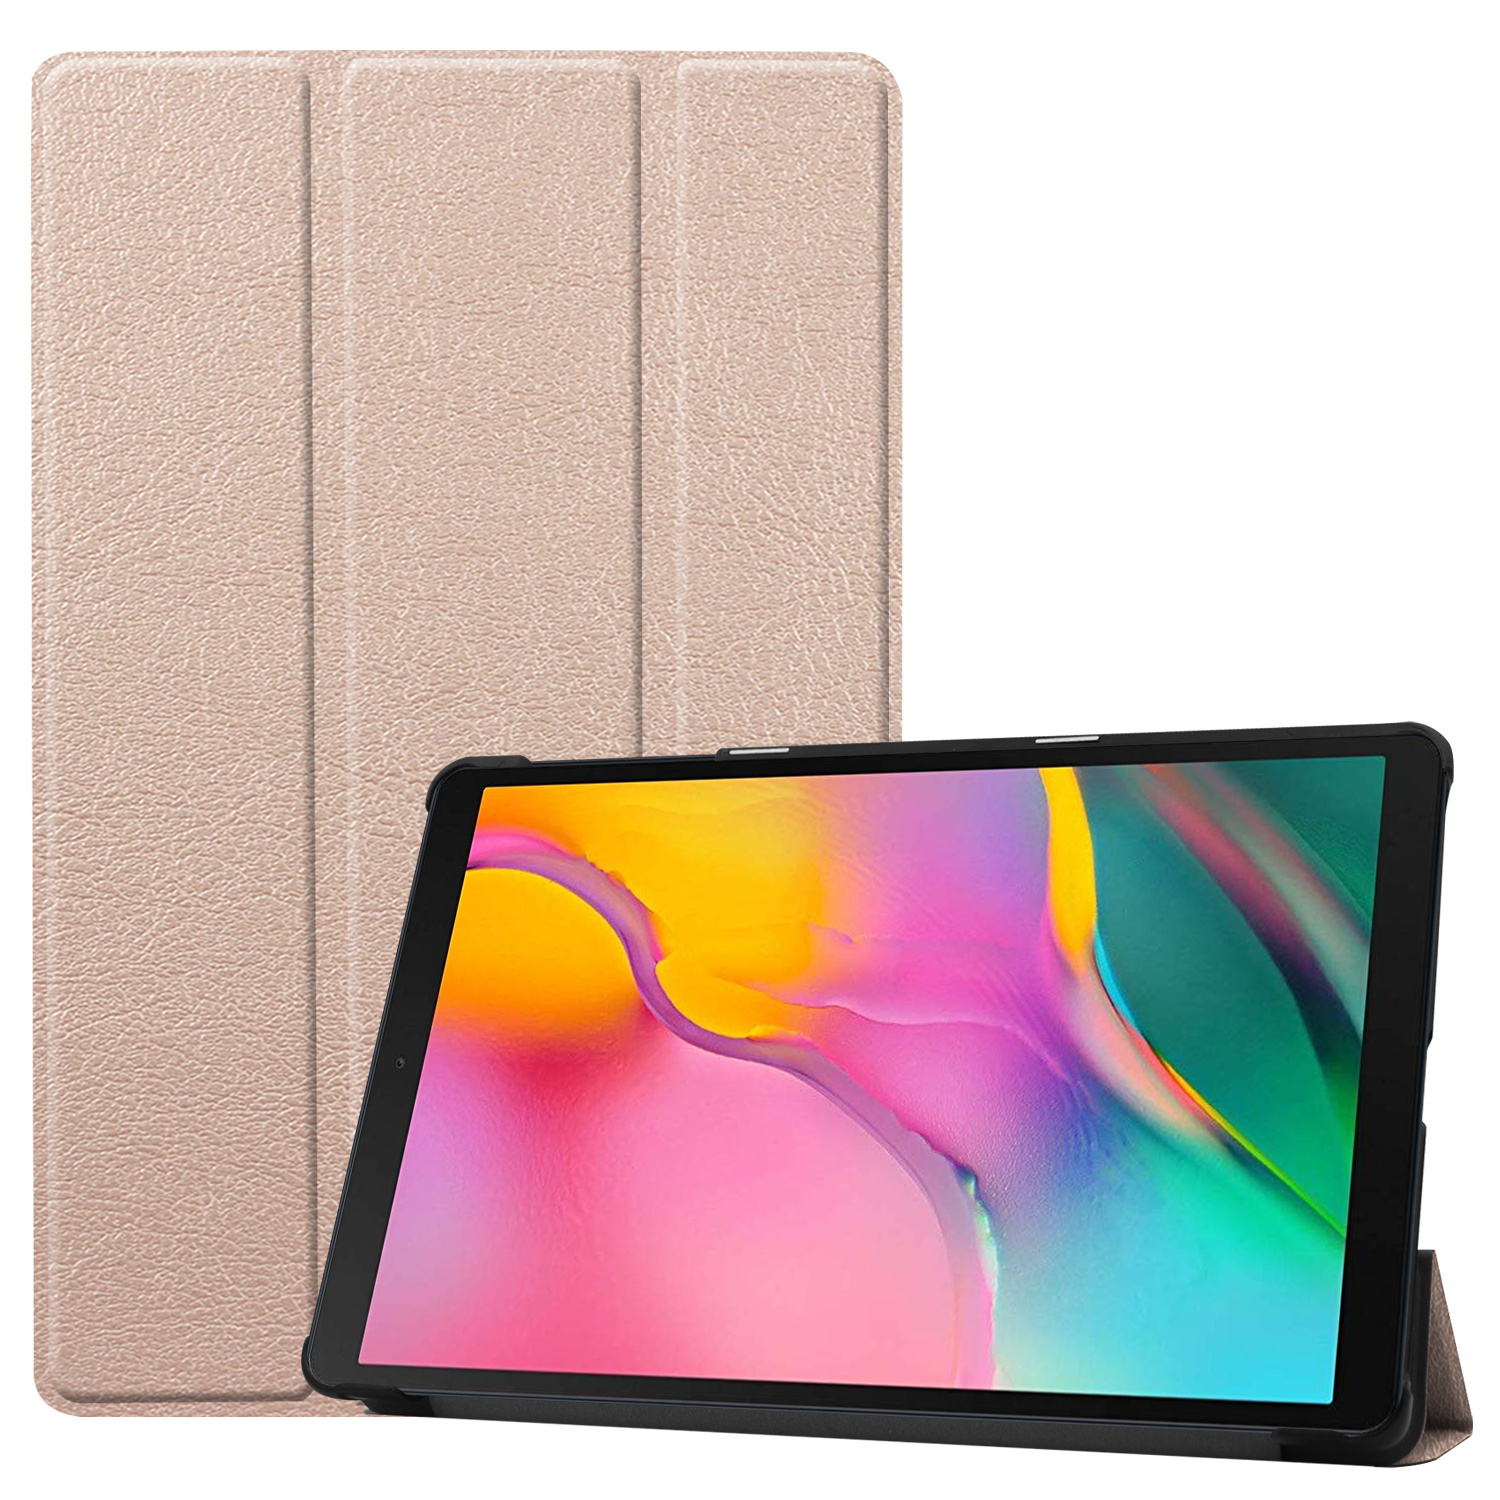 Schouderophalend Collega Vouwen Samsung Galaxy Tab A 2019 hoes - Tri-Fold Book Case - Goud | Case2go.nl